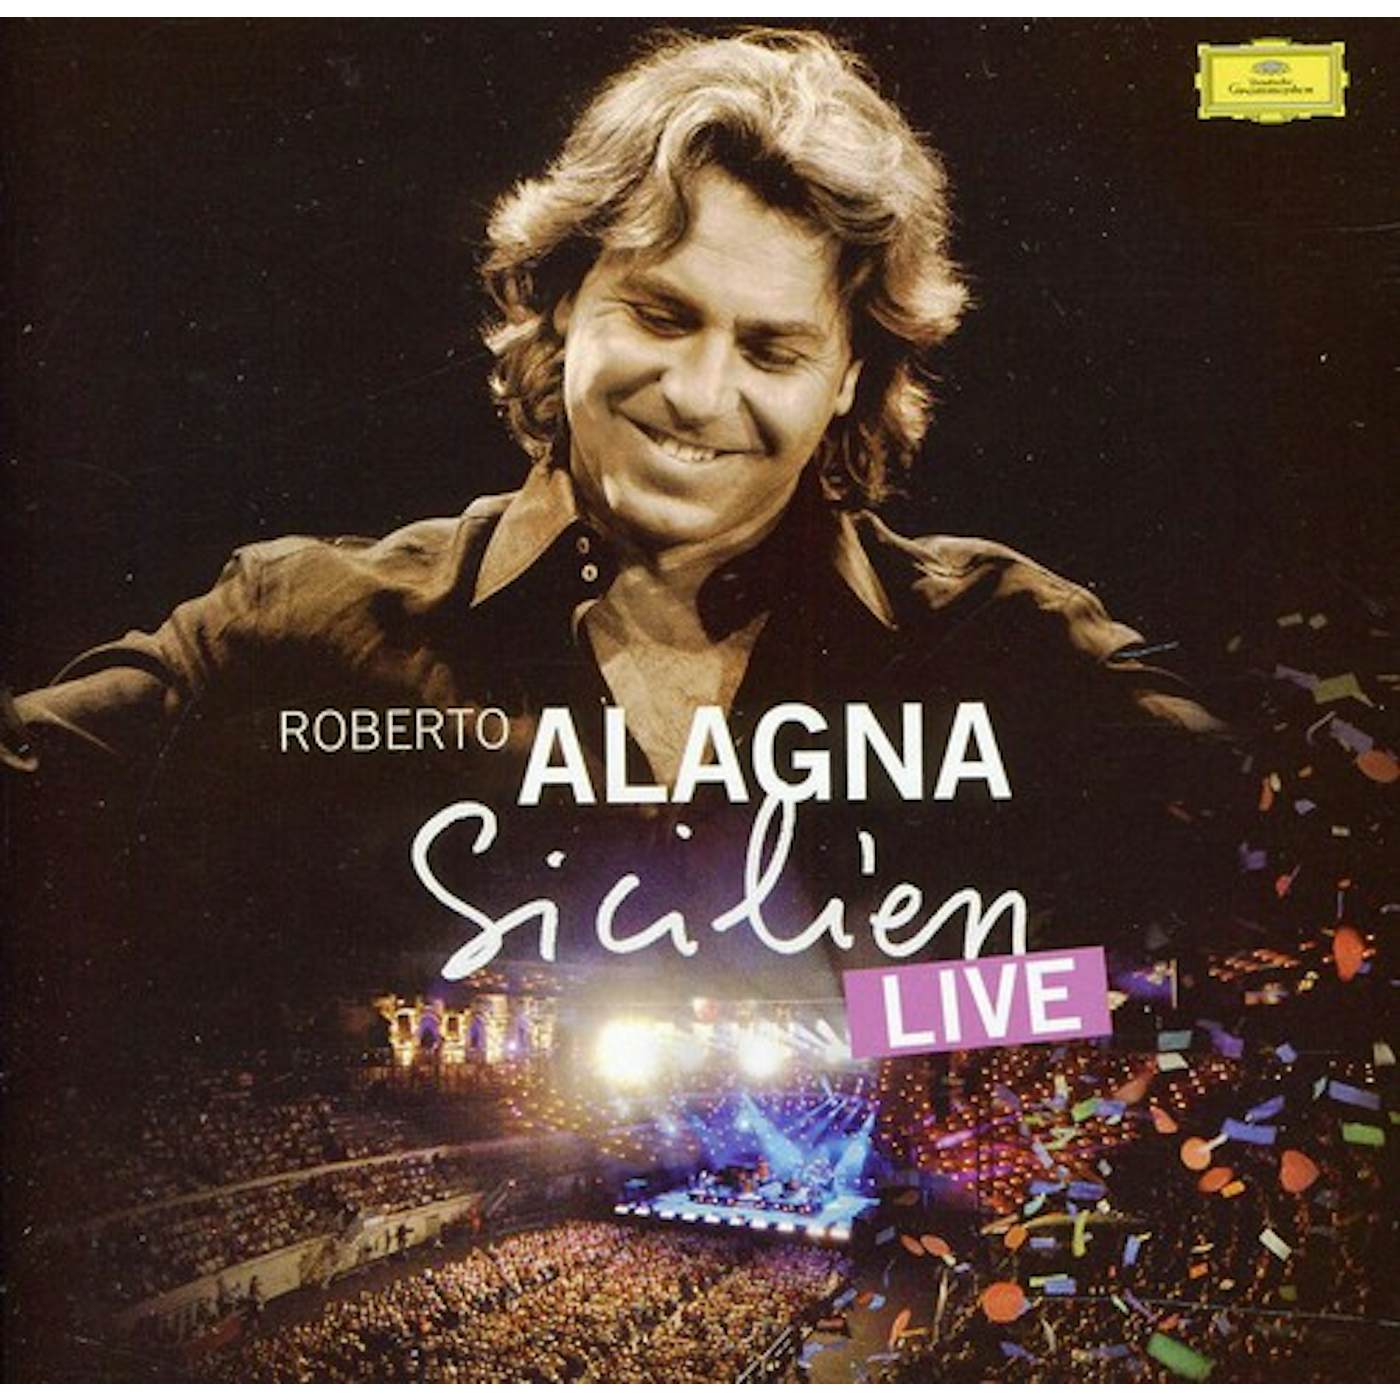 Roberto Alagna LE SICILIEN LIVE CD